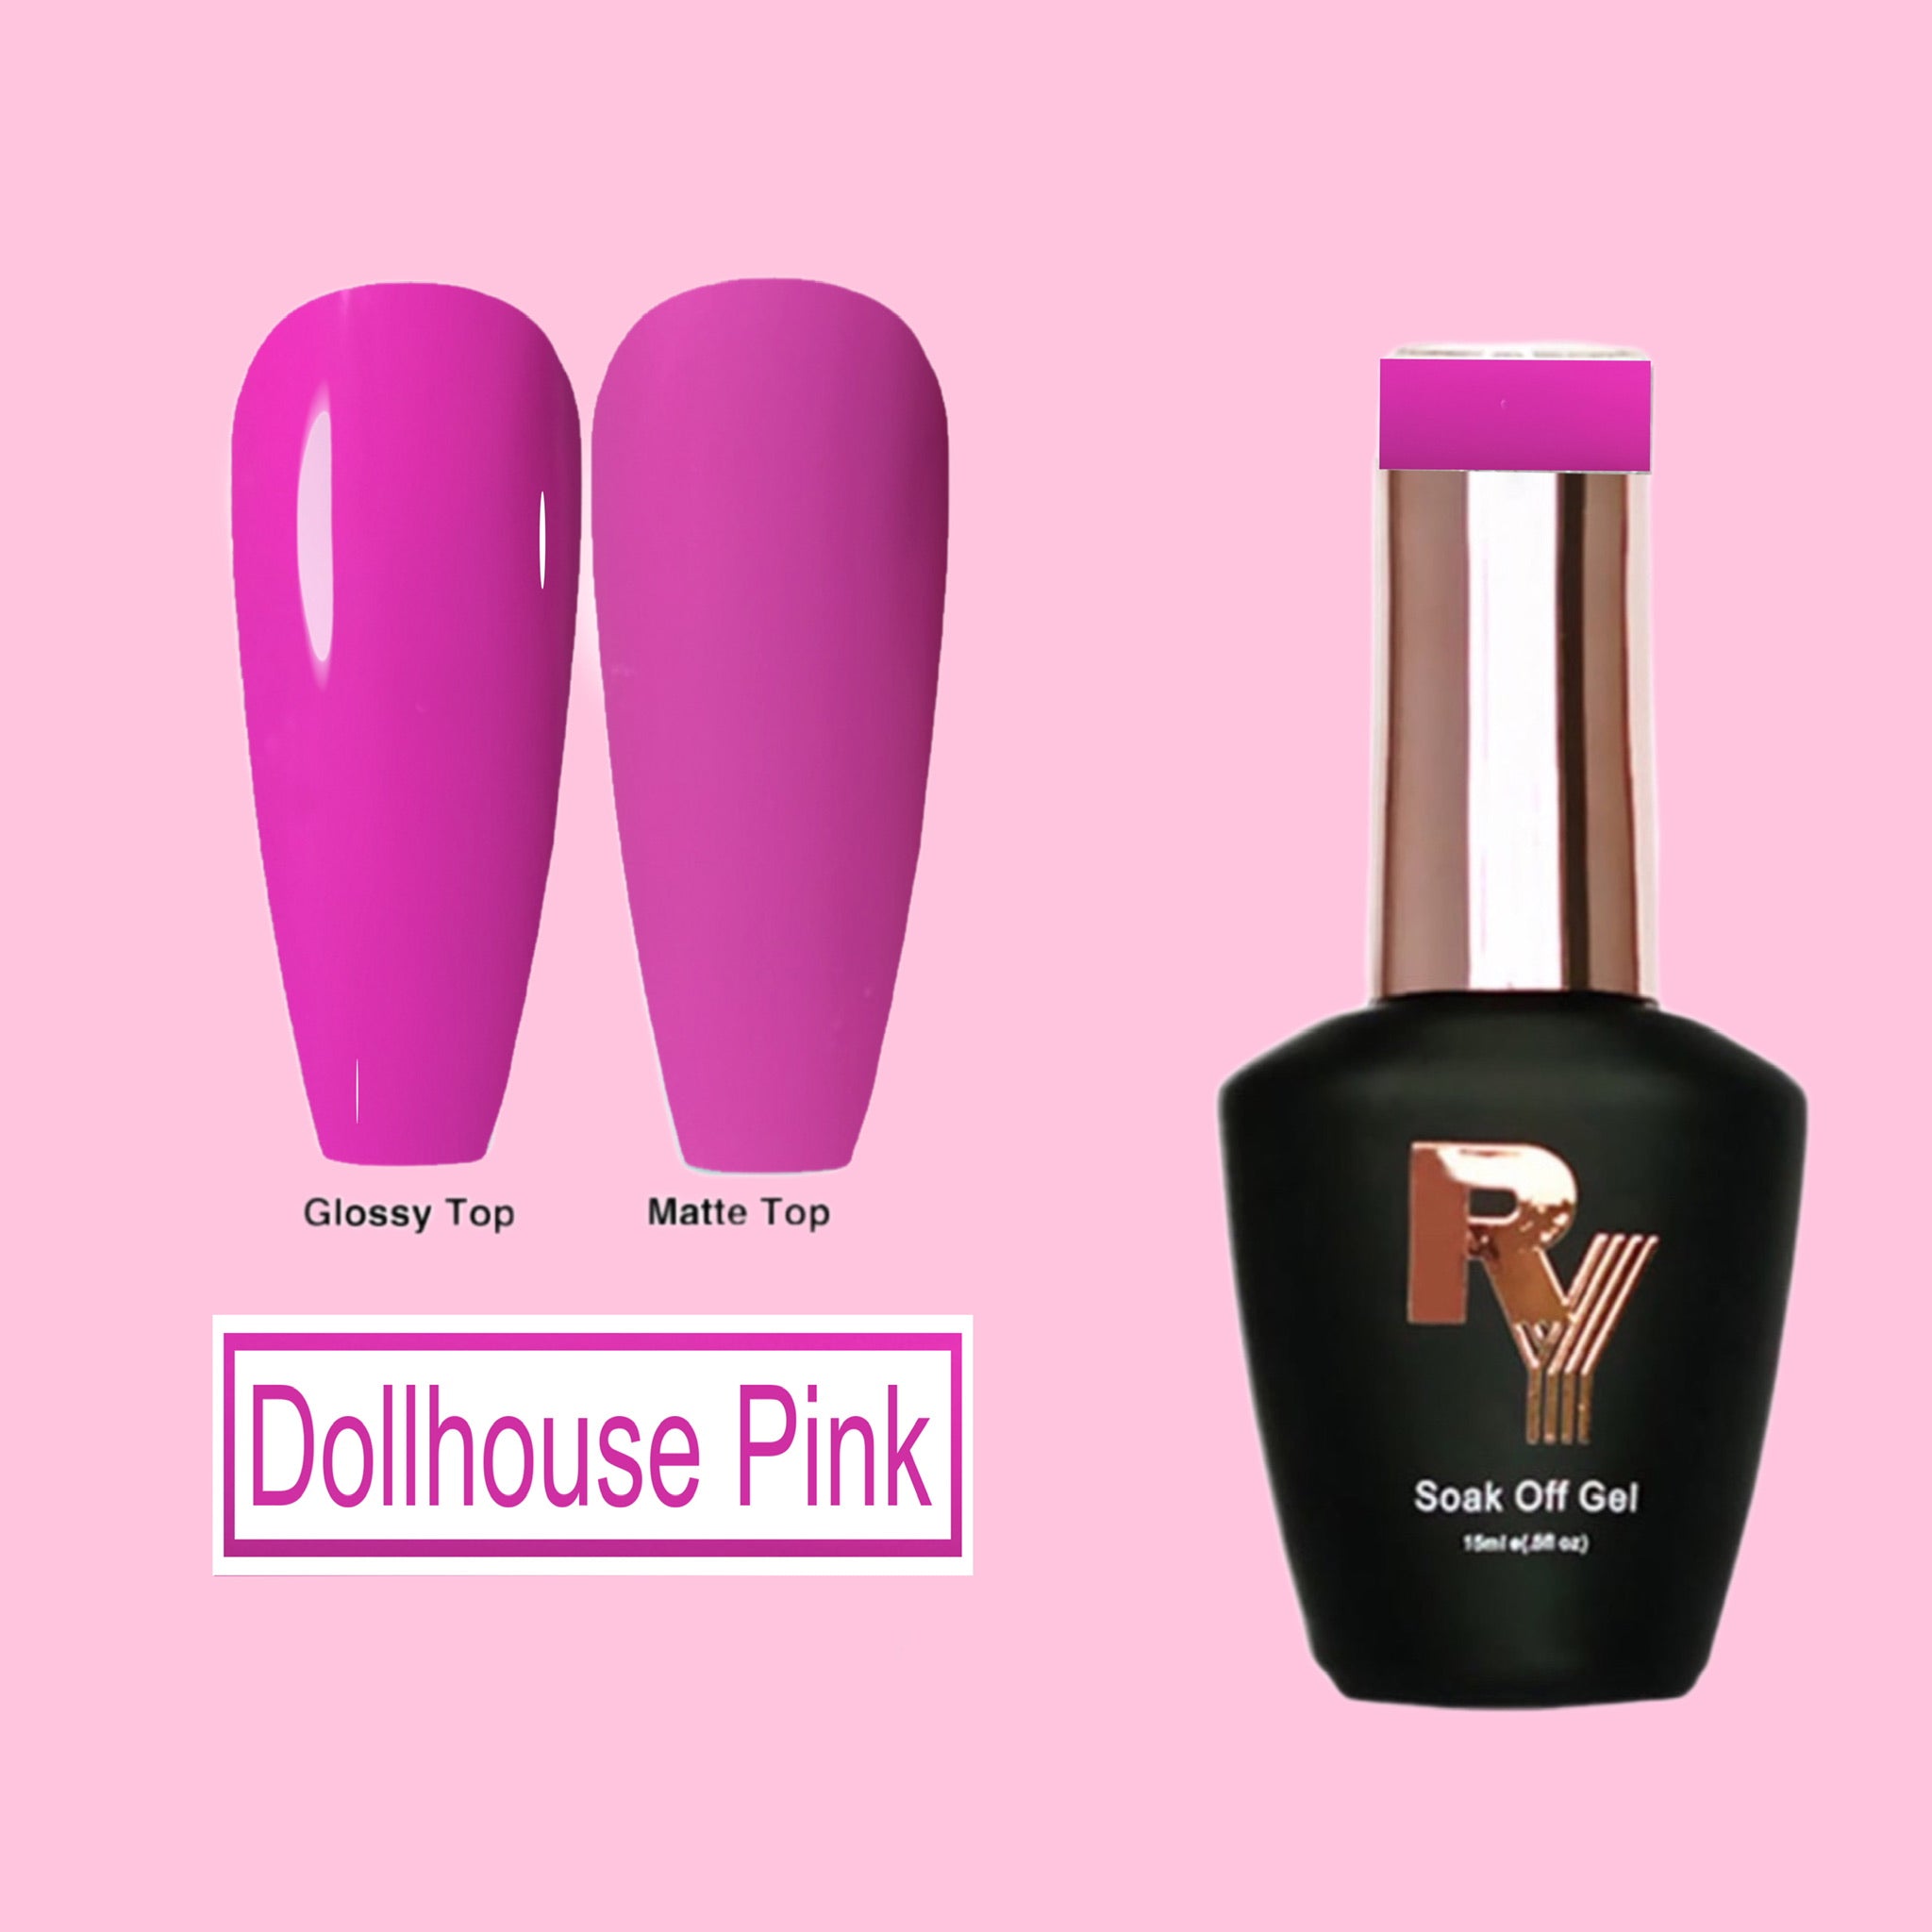 Dollhouse Pink